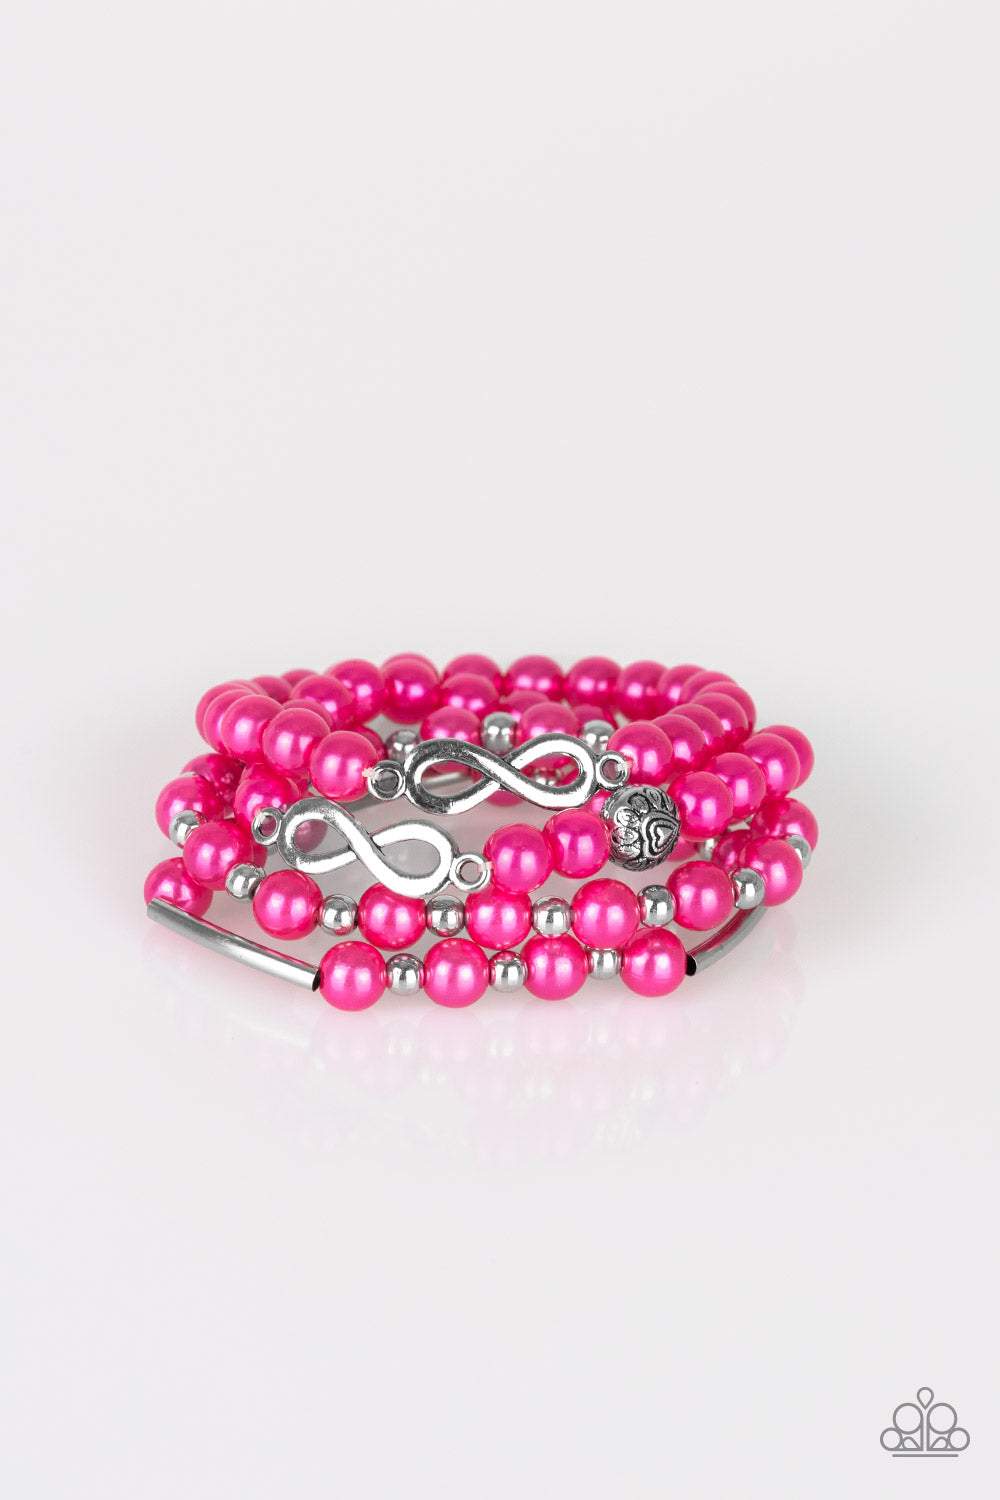 Limitless Luxury-Pink Bracelet